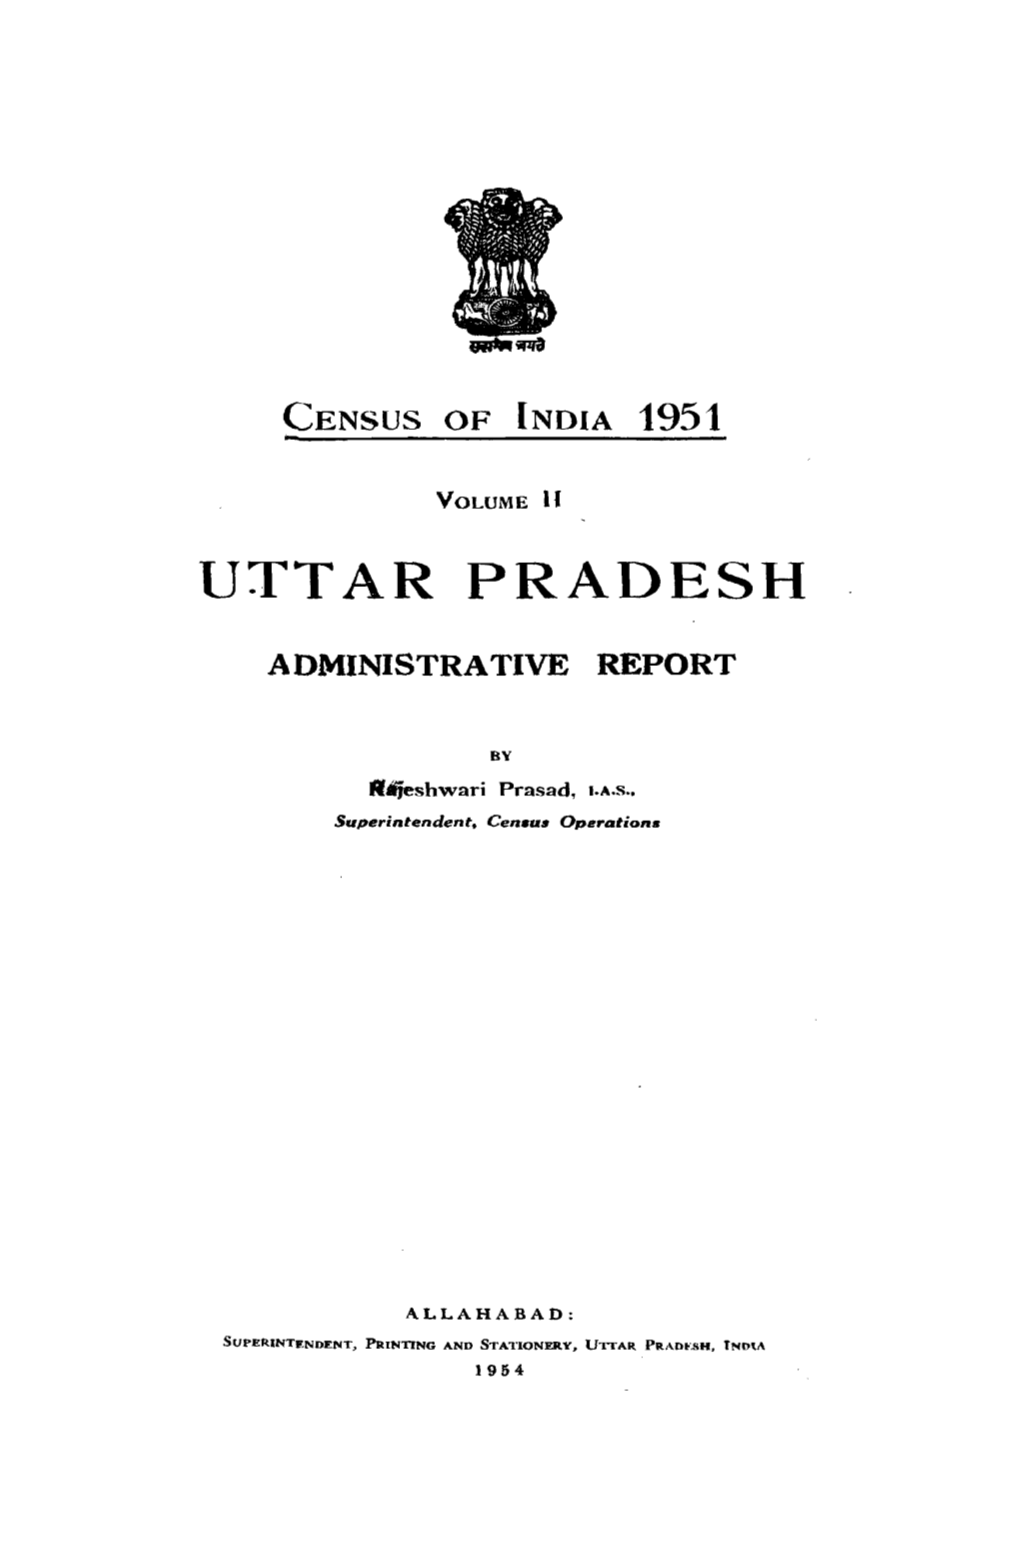 Administrative Report, Vol-II, Uttar Pradesh